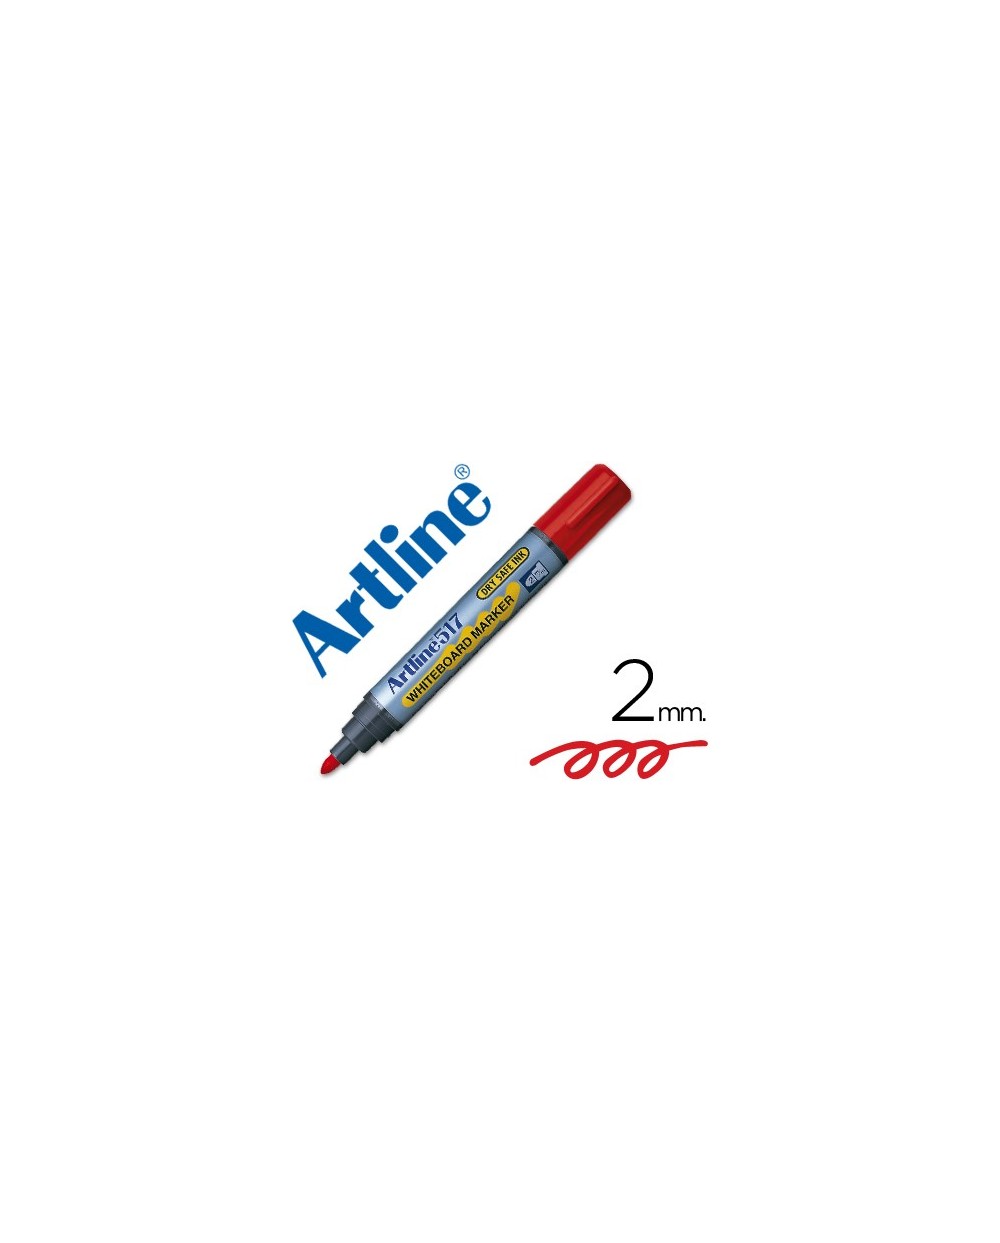 Rotulador artline pizarra ek 517 rojo punta redonda 2 mm tinta de bajo olor